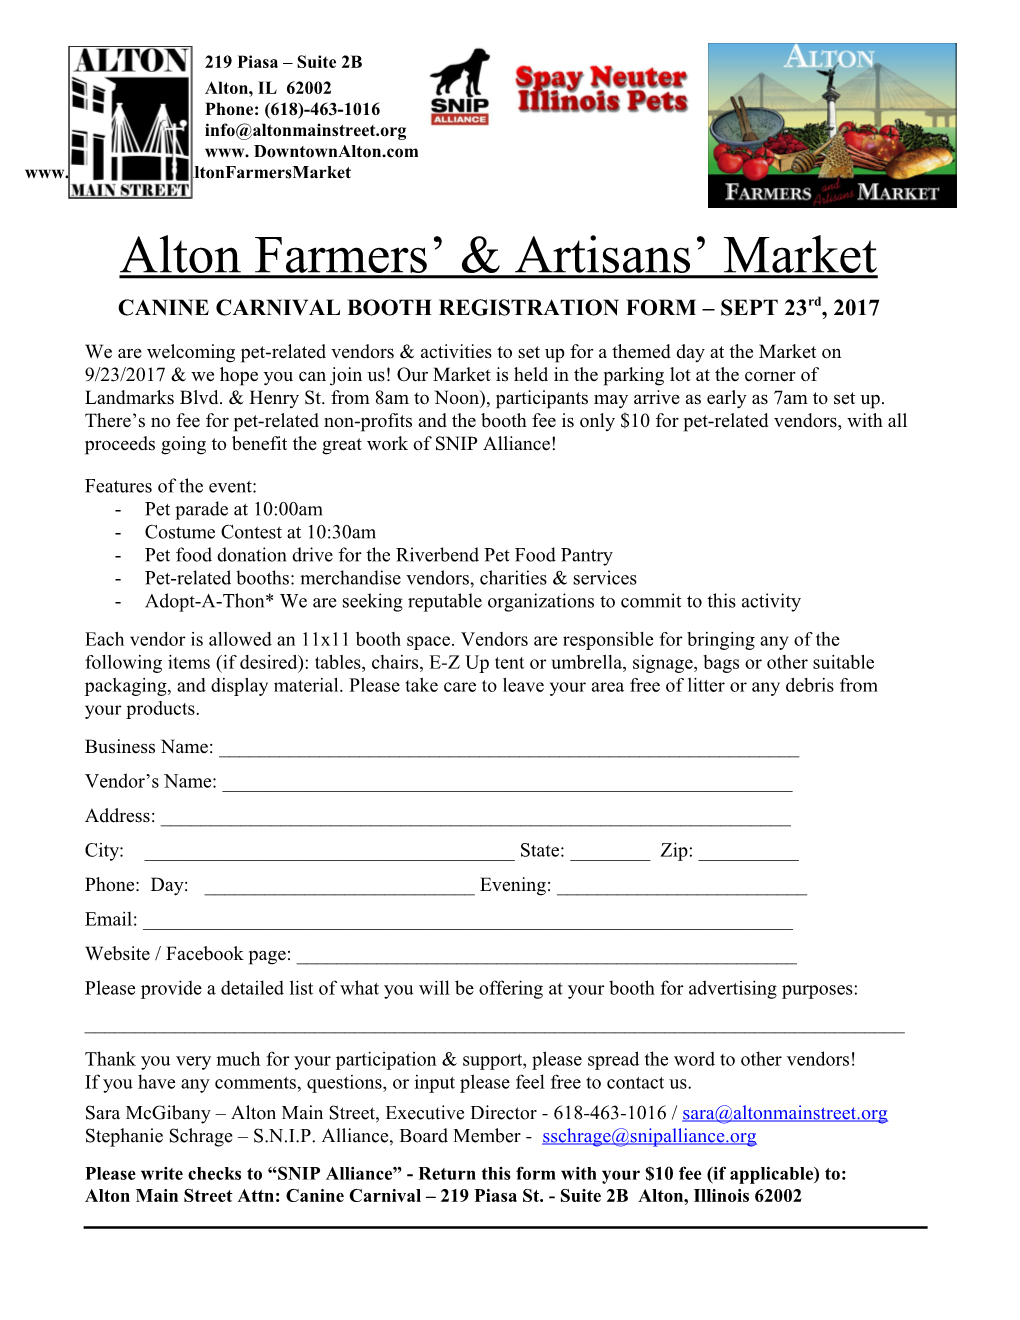 Alton Marketplace Association Partnership Drive for 2007